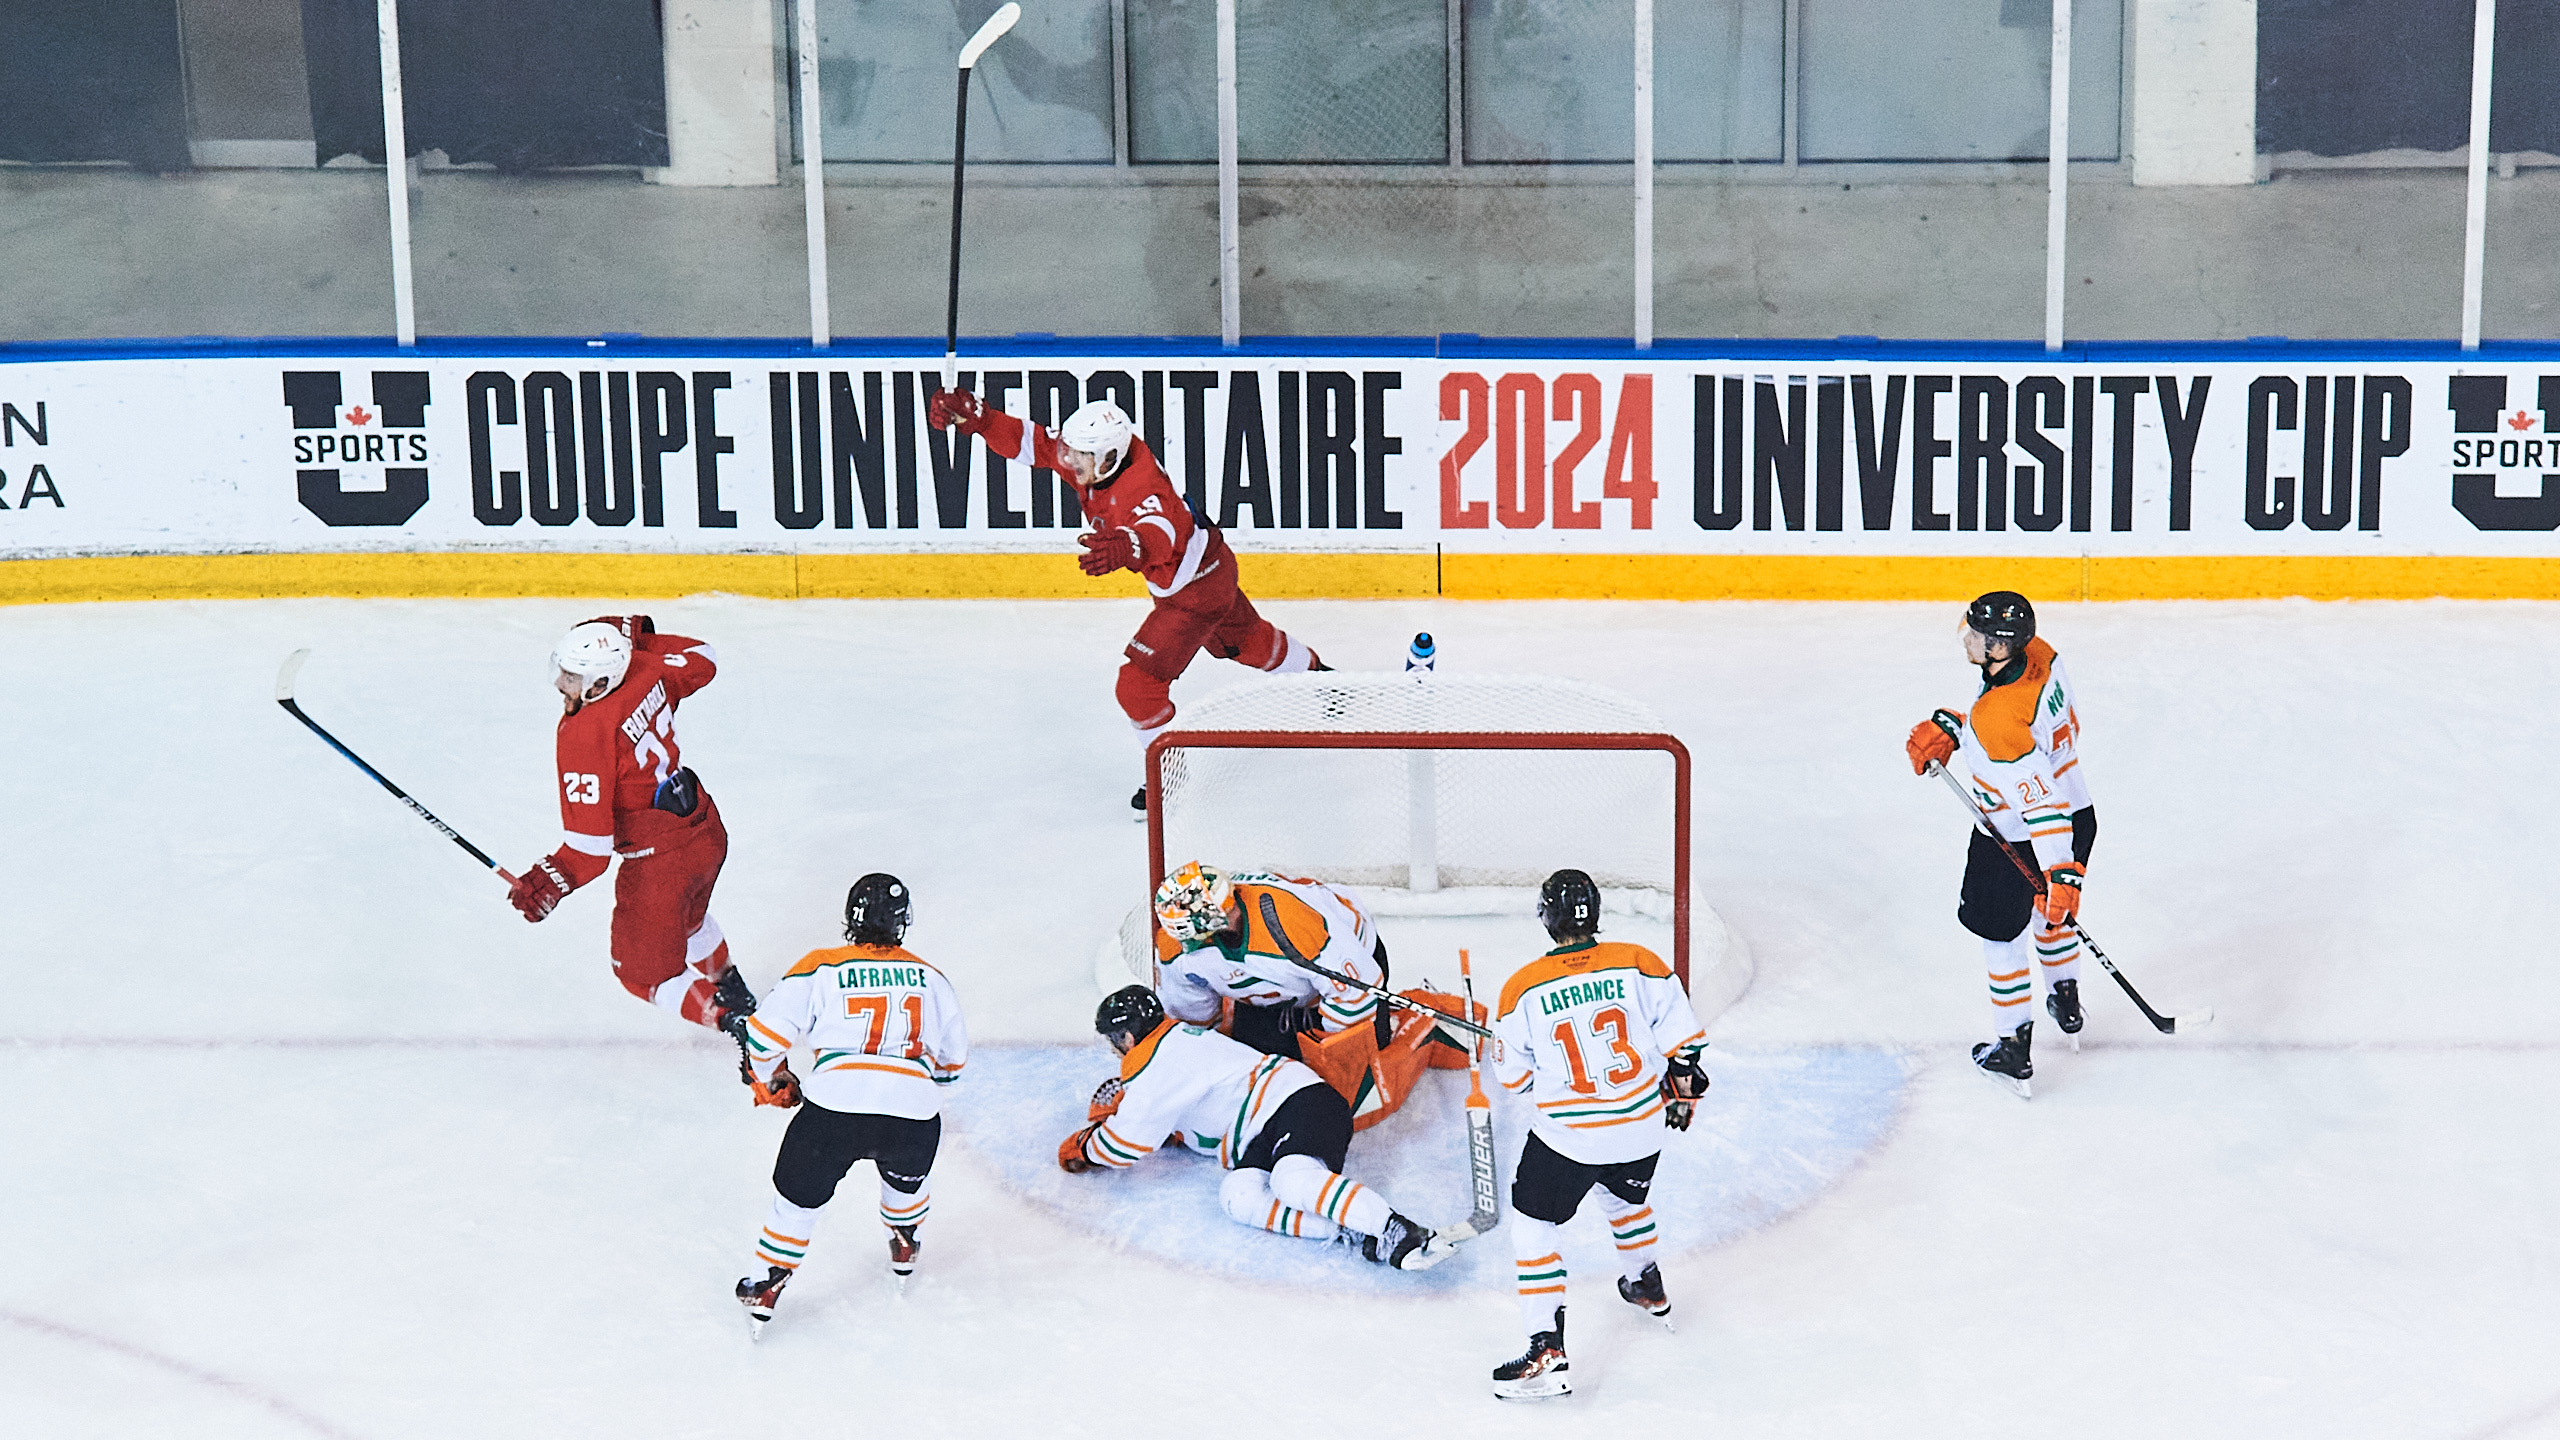 McGill University hockey players celebrate a goal on the ice